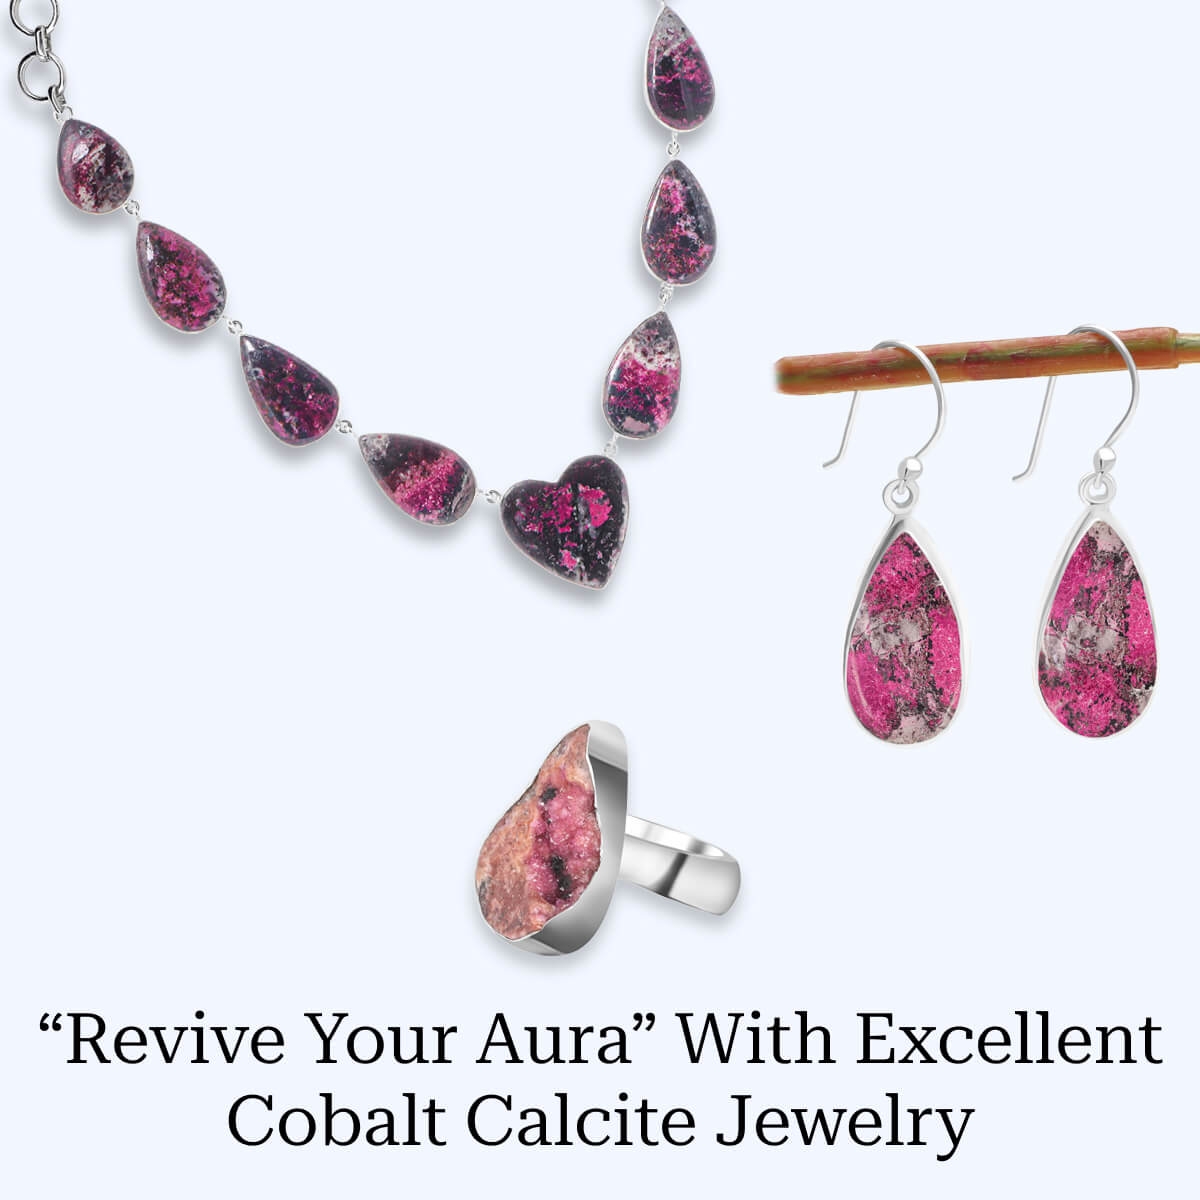 Cobalt Calcite Jewelry